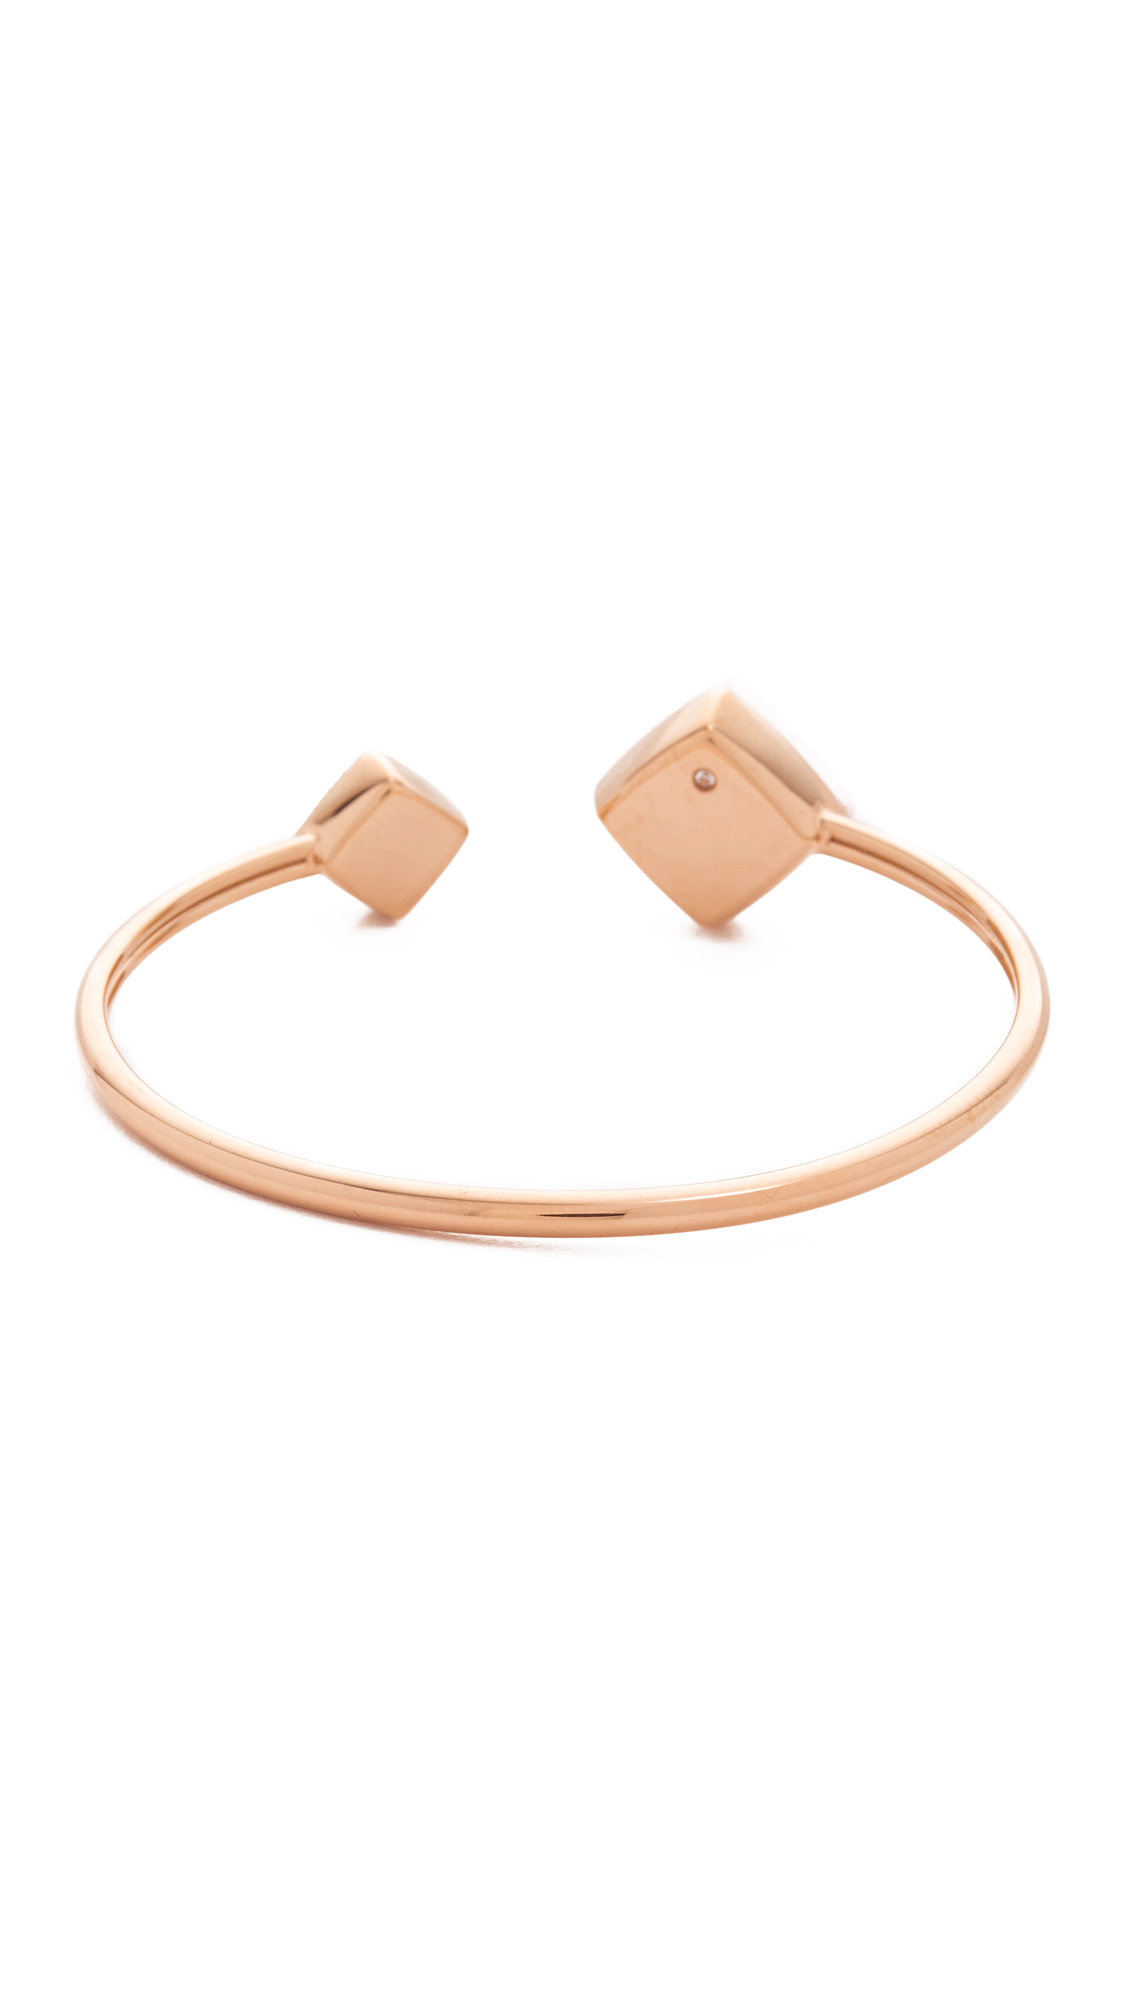 Michael Kors Rose Quartz Flex Cuff Bracelet in Pink - Lyst